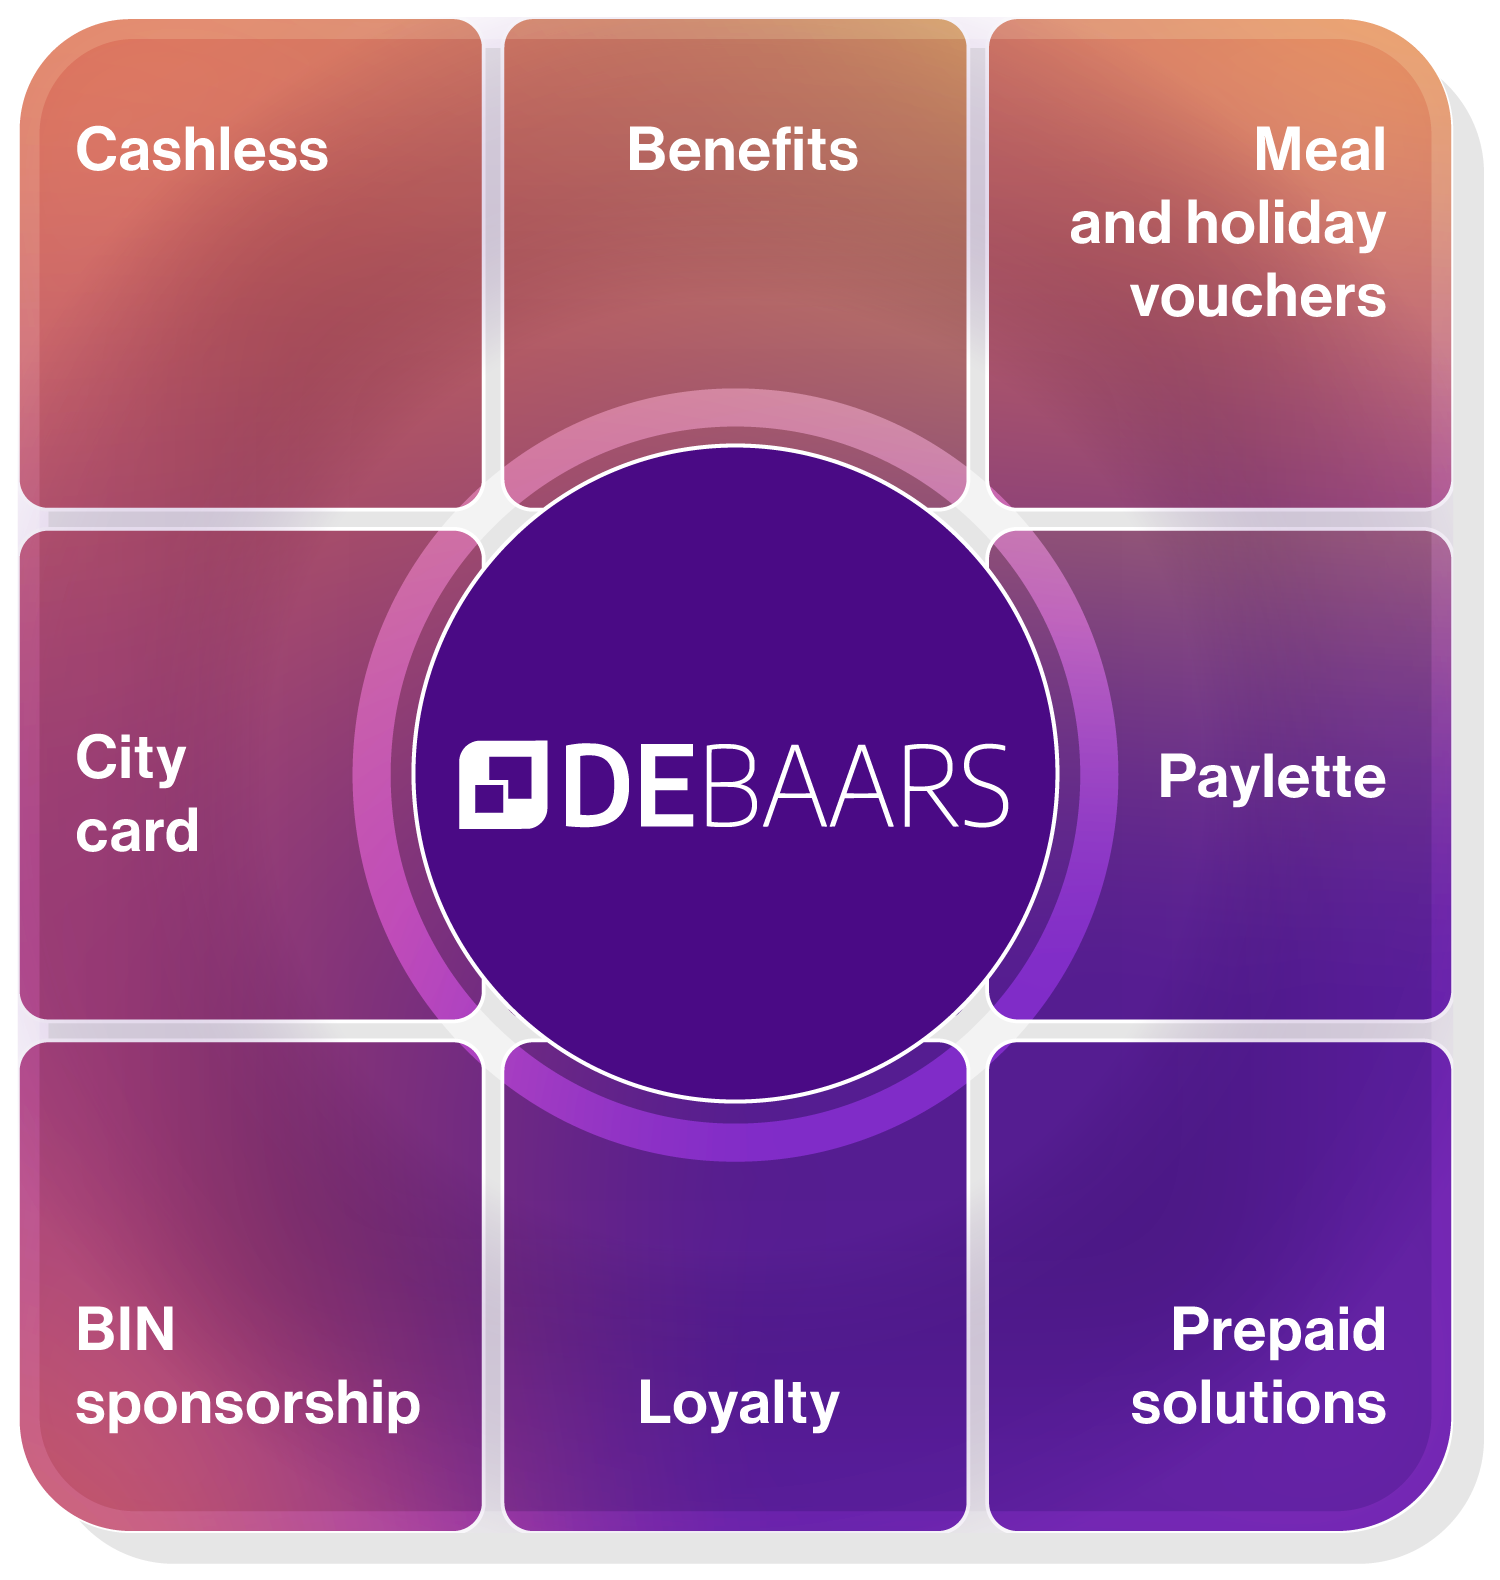 DEBAARS financial products